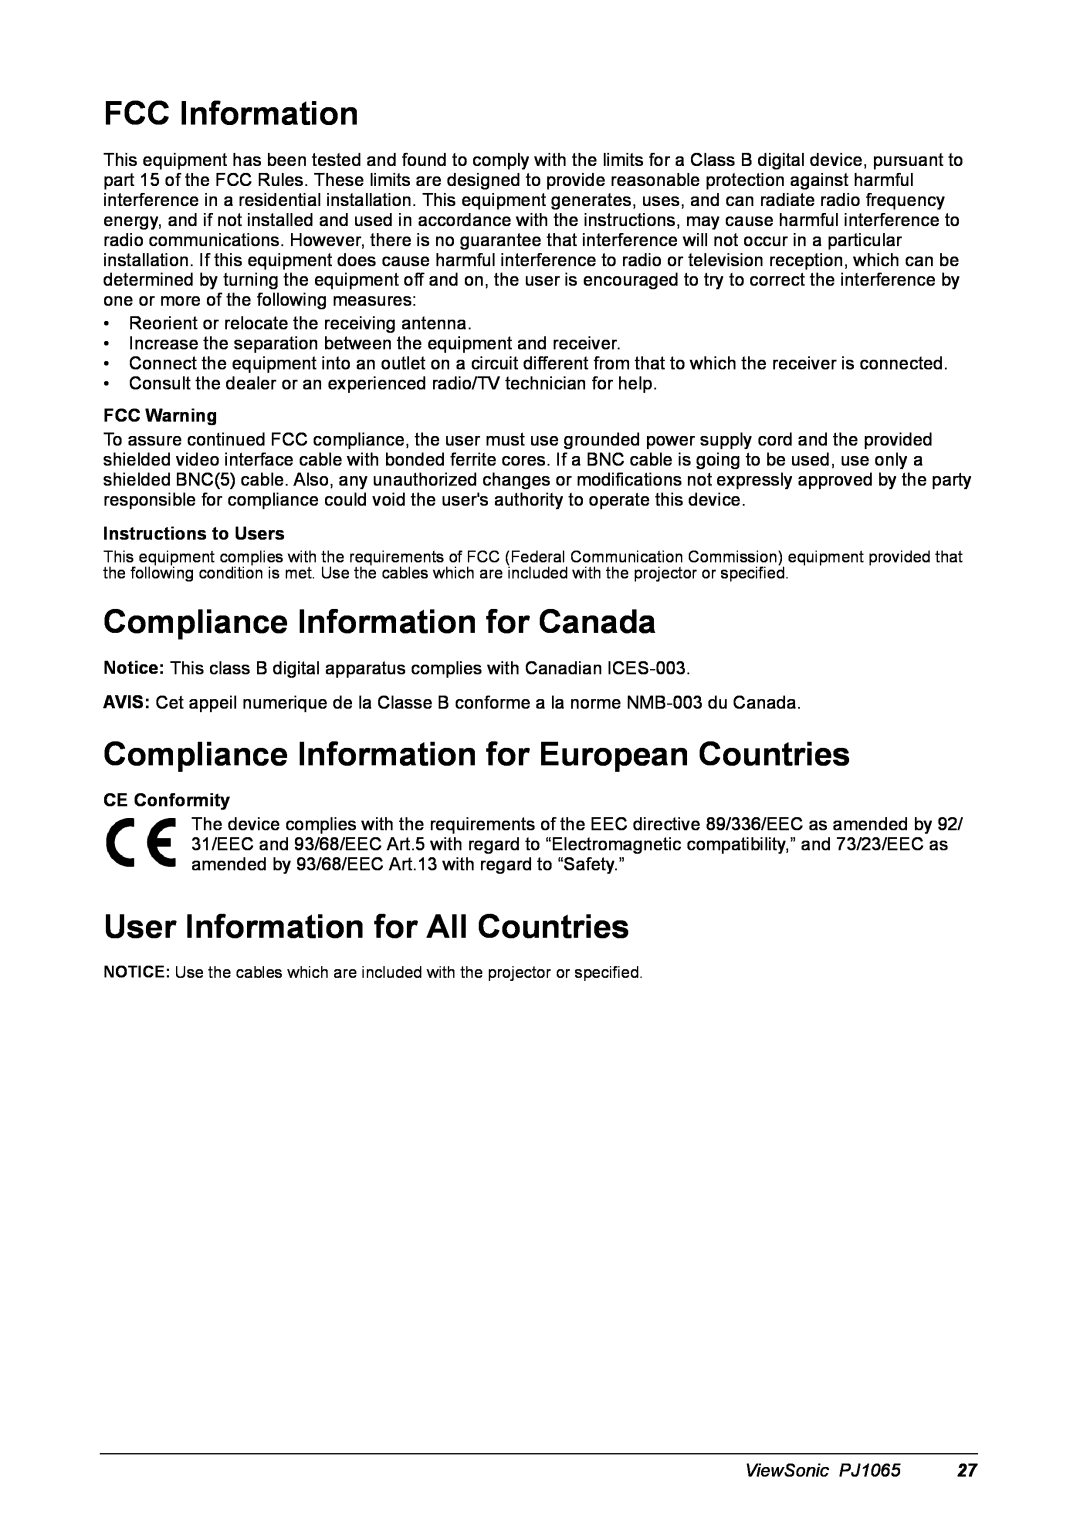 ViewSonic PJ1065 manual FCC Information, Compliance Information for Canada, Compliance Information for European Countries 